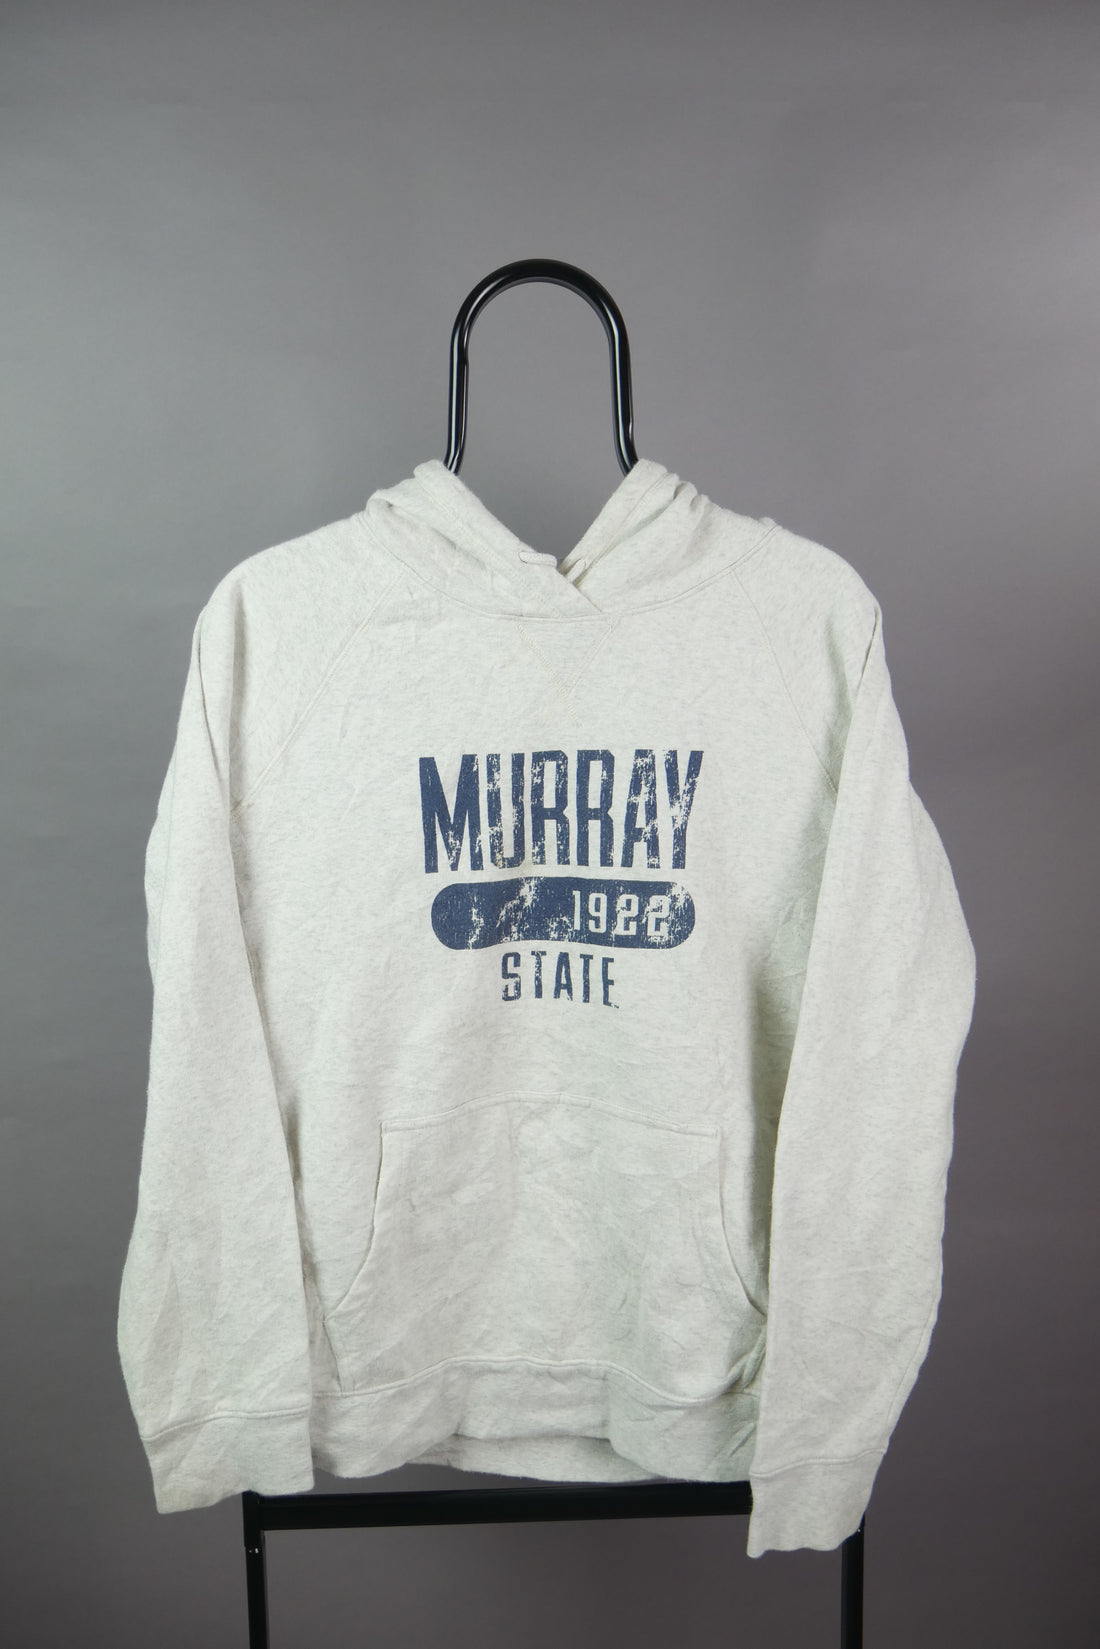 The Murray State Champion Graphic Hoodie (M)